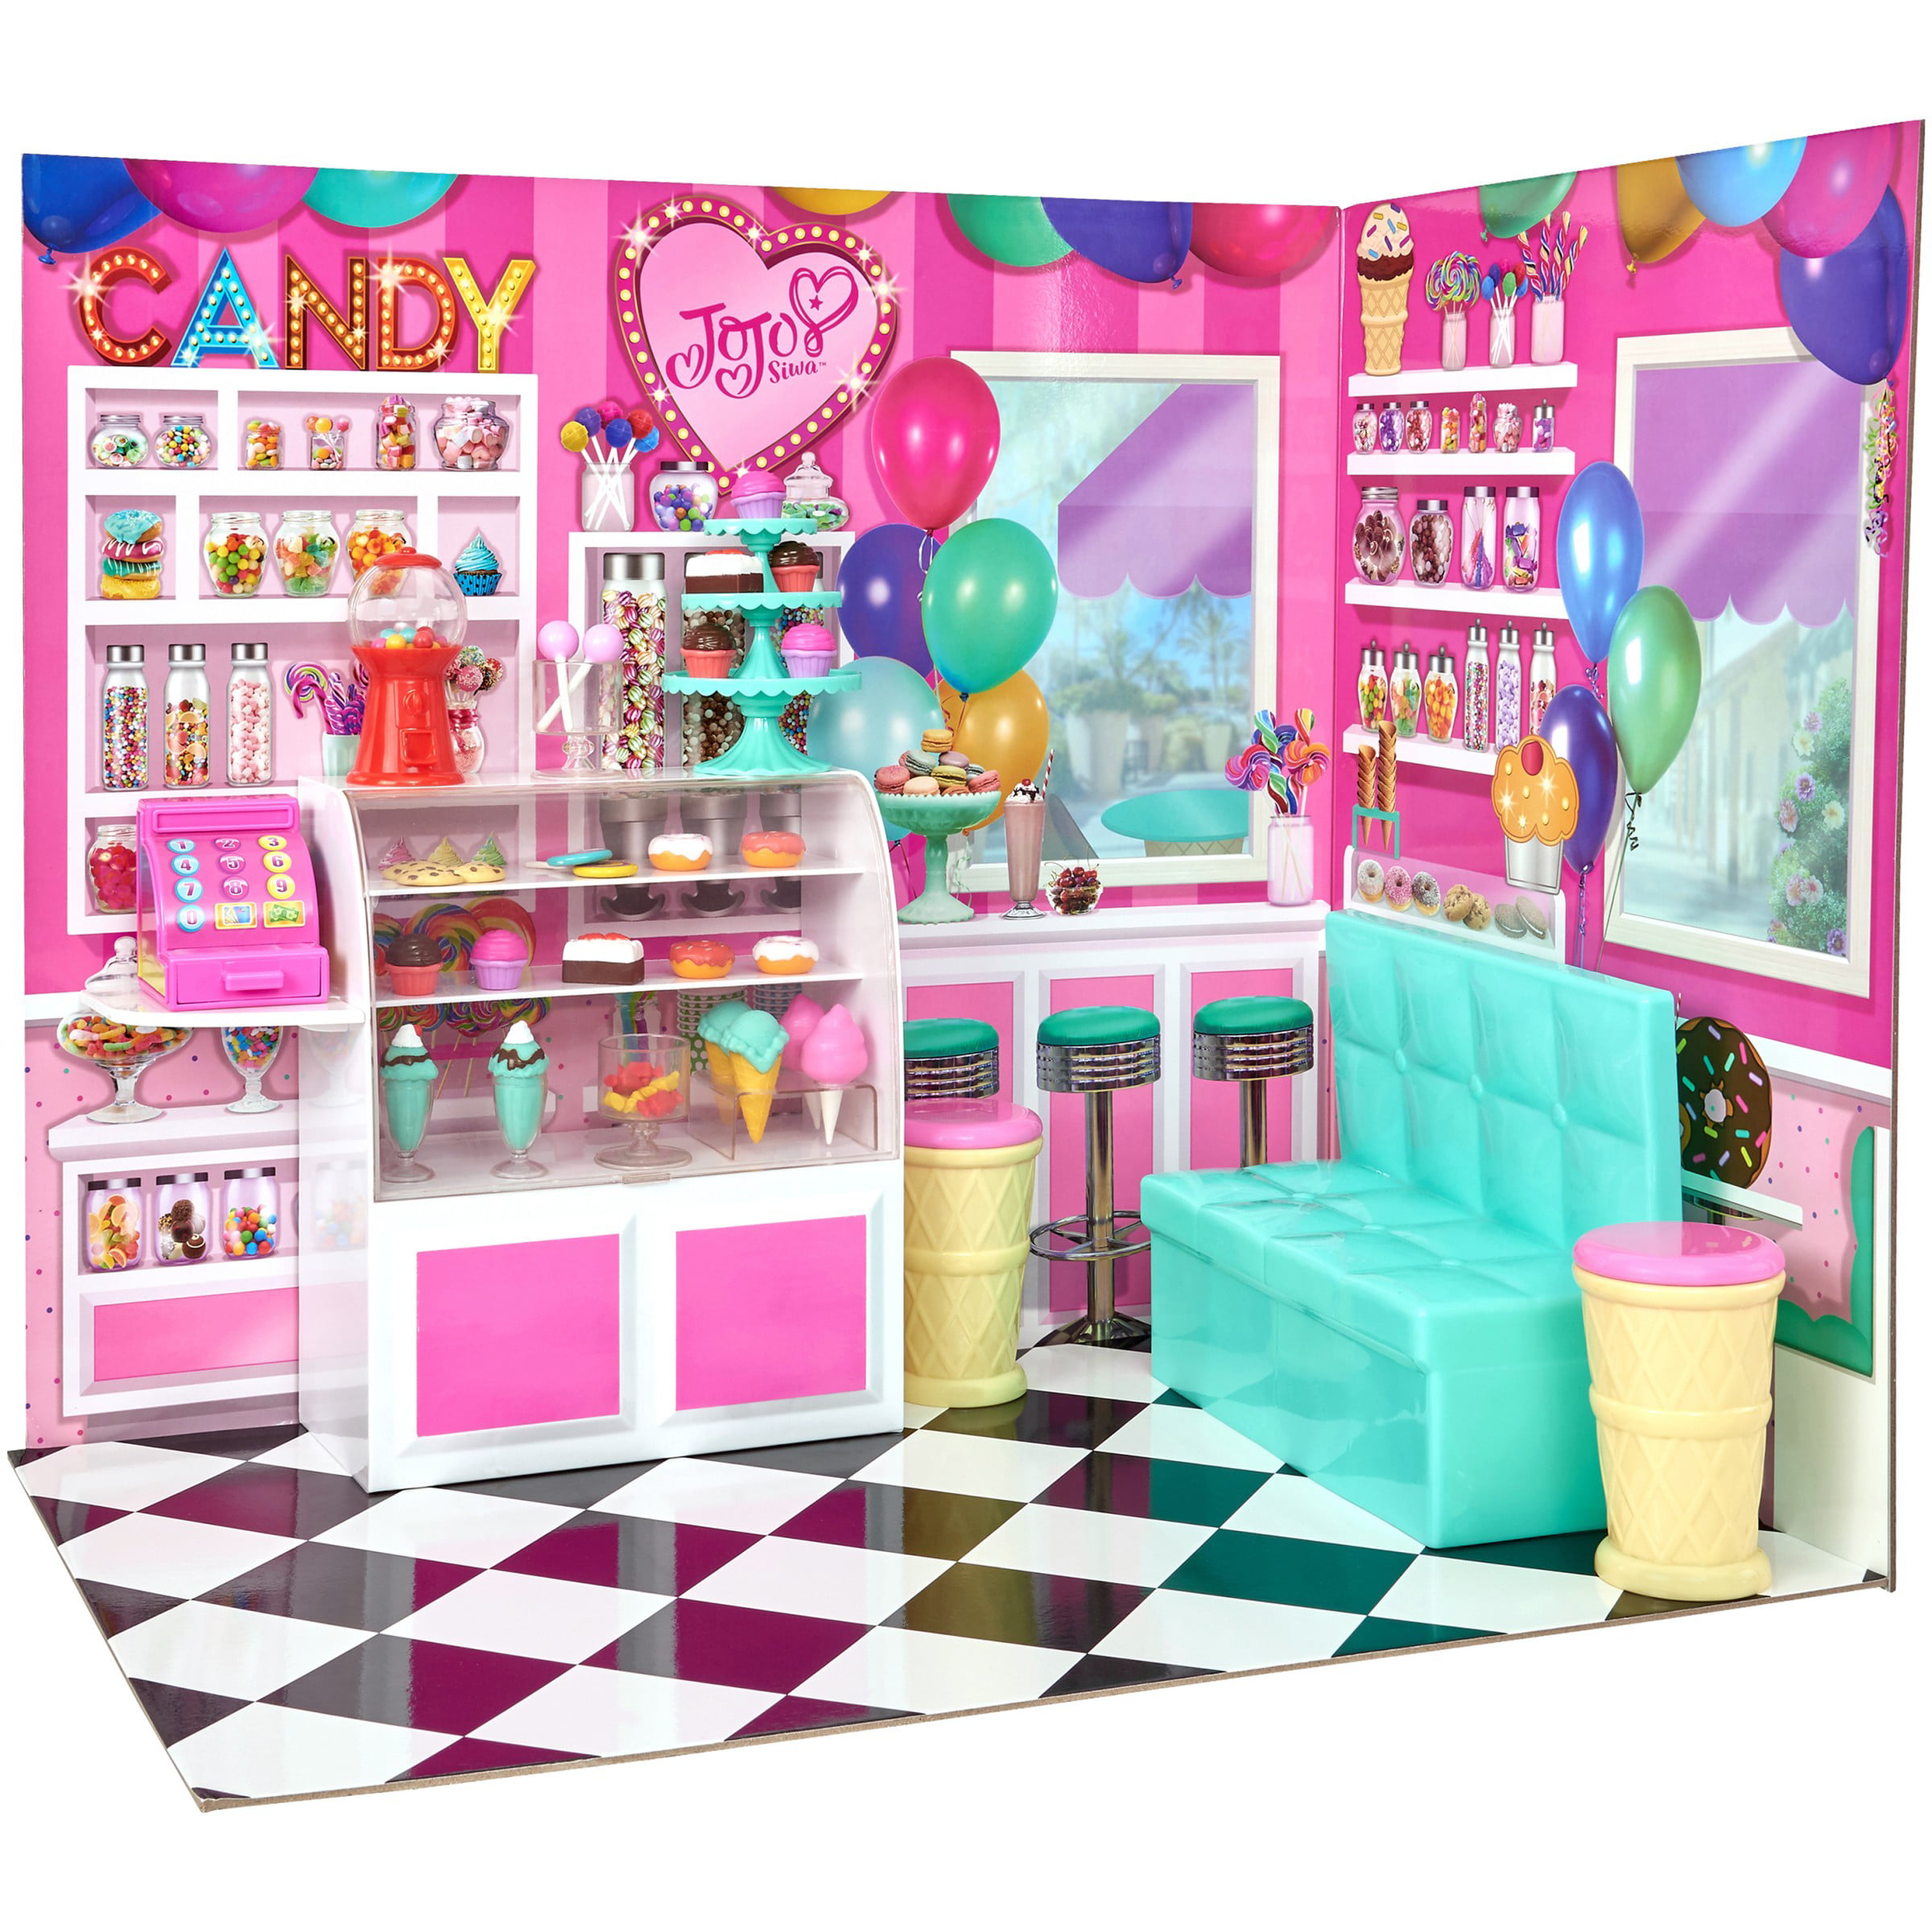 Candy candy shop 1. Канди шоп. Candy Candy shop магазин. My Life as игрушки. Candy shop Серов.